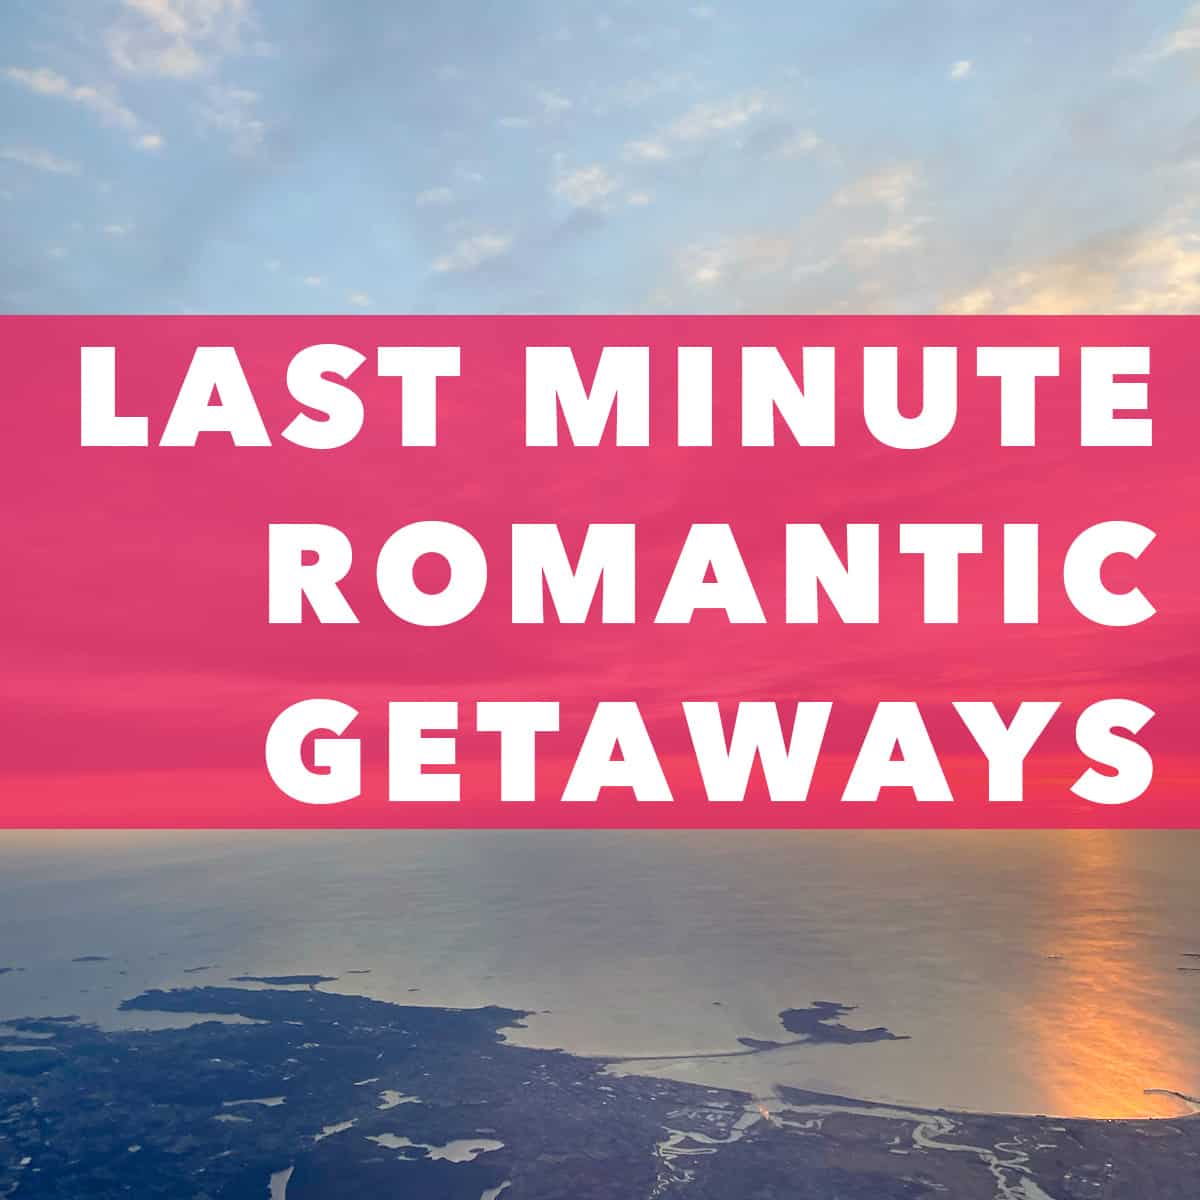 5 Last Minute Romantic Getaway Ideas